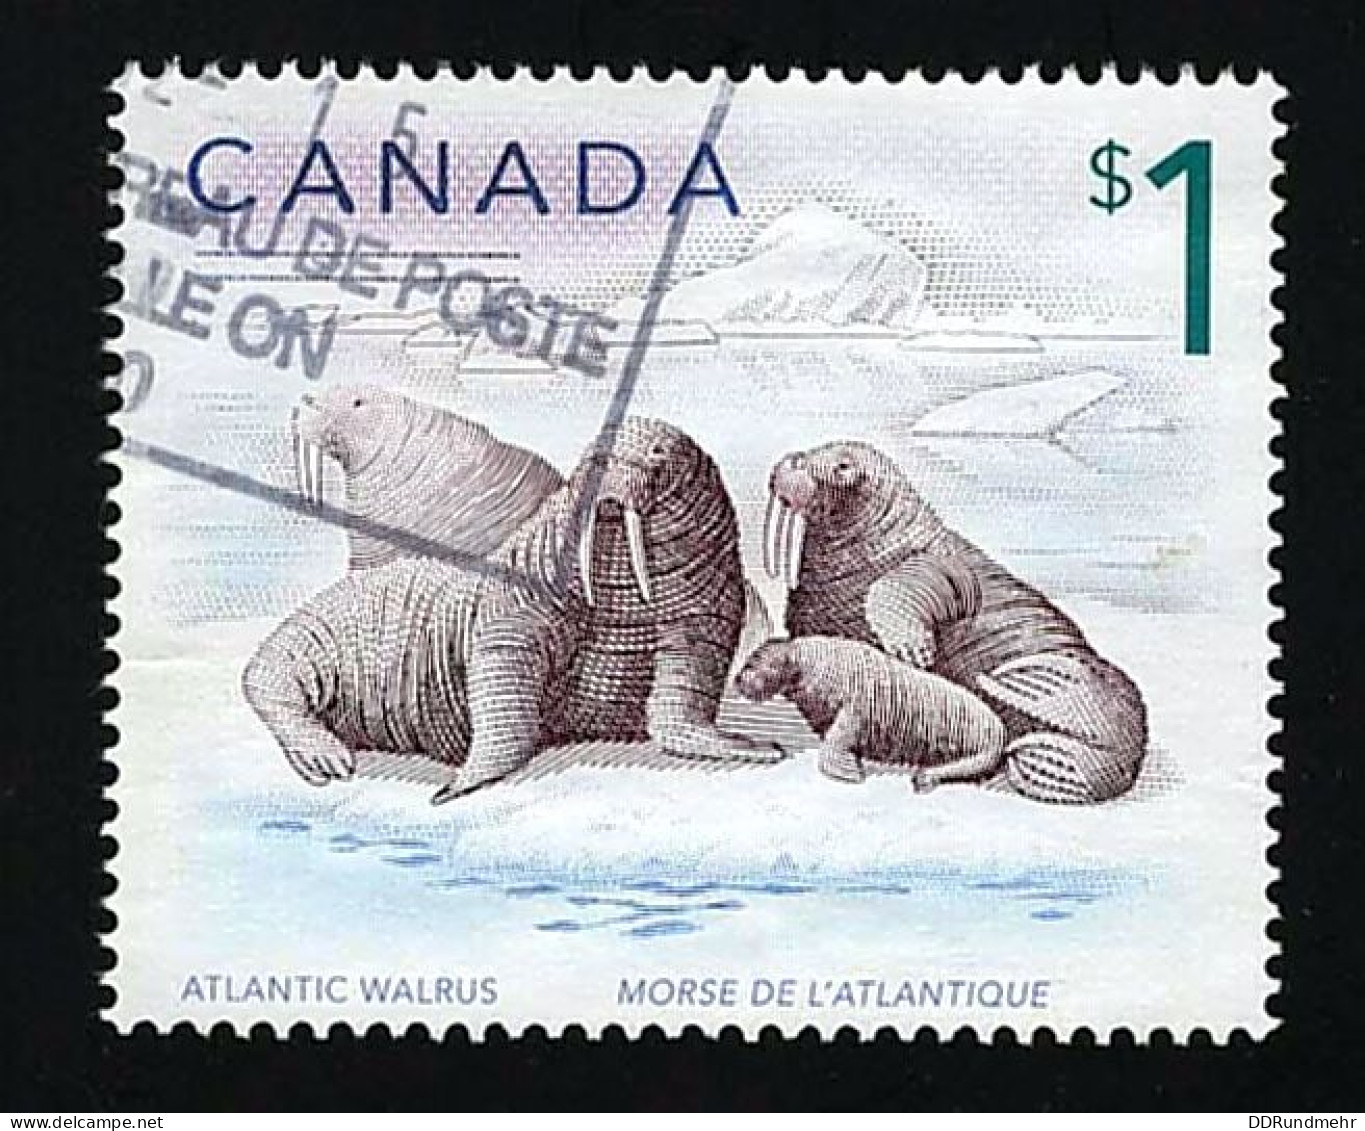 2005 Atlantic Walrus Michel CA 2300 Stamp Number CA 1689 Yvert Et Tellier CA 2183 Stanley Gibbons CA 1758 Used - Oblitérés